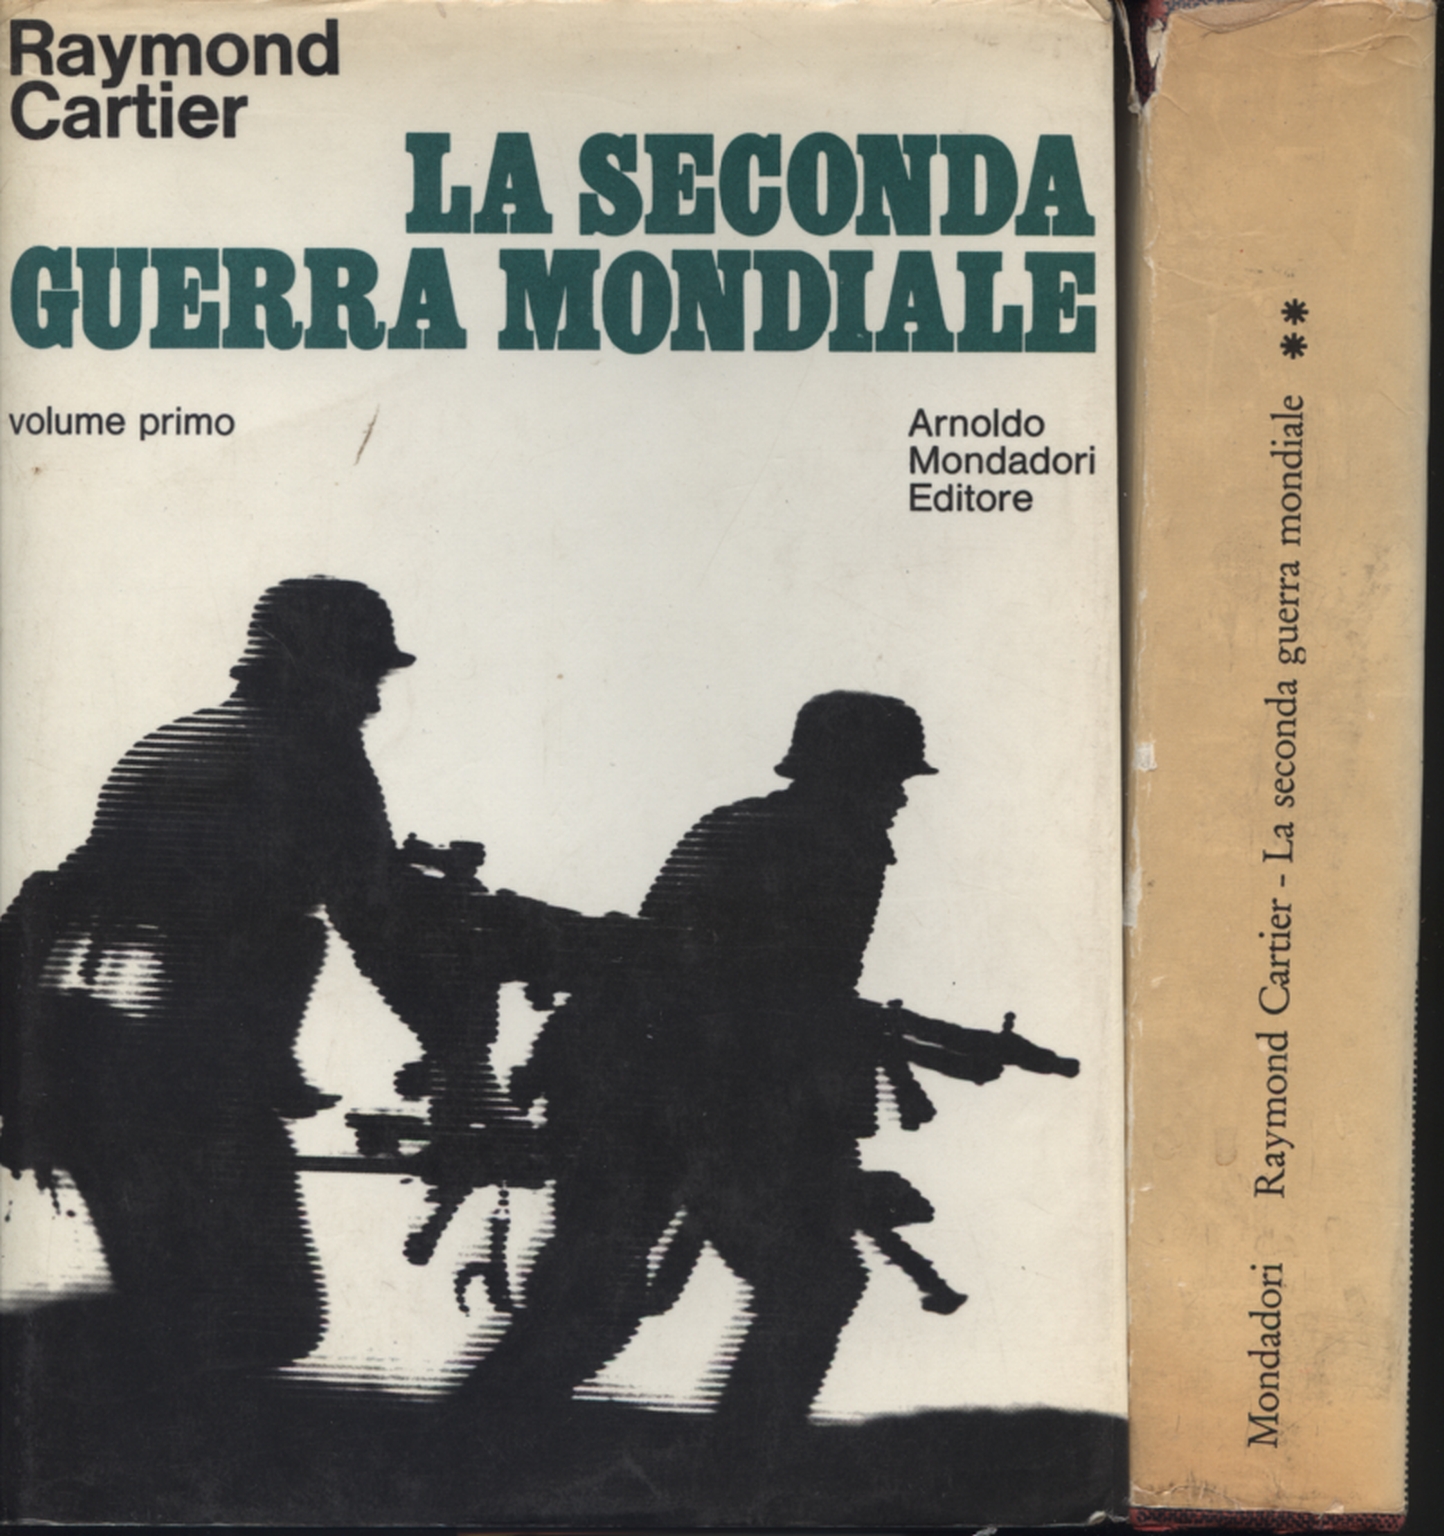 La seconda guerra mondiale (2 Volumi), Raymond Cartier